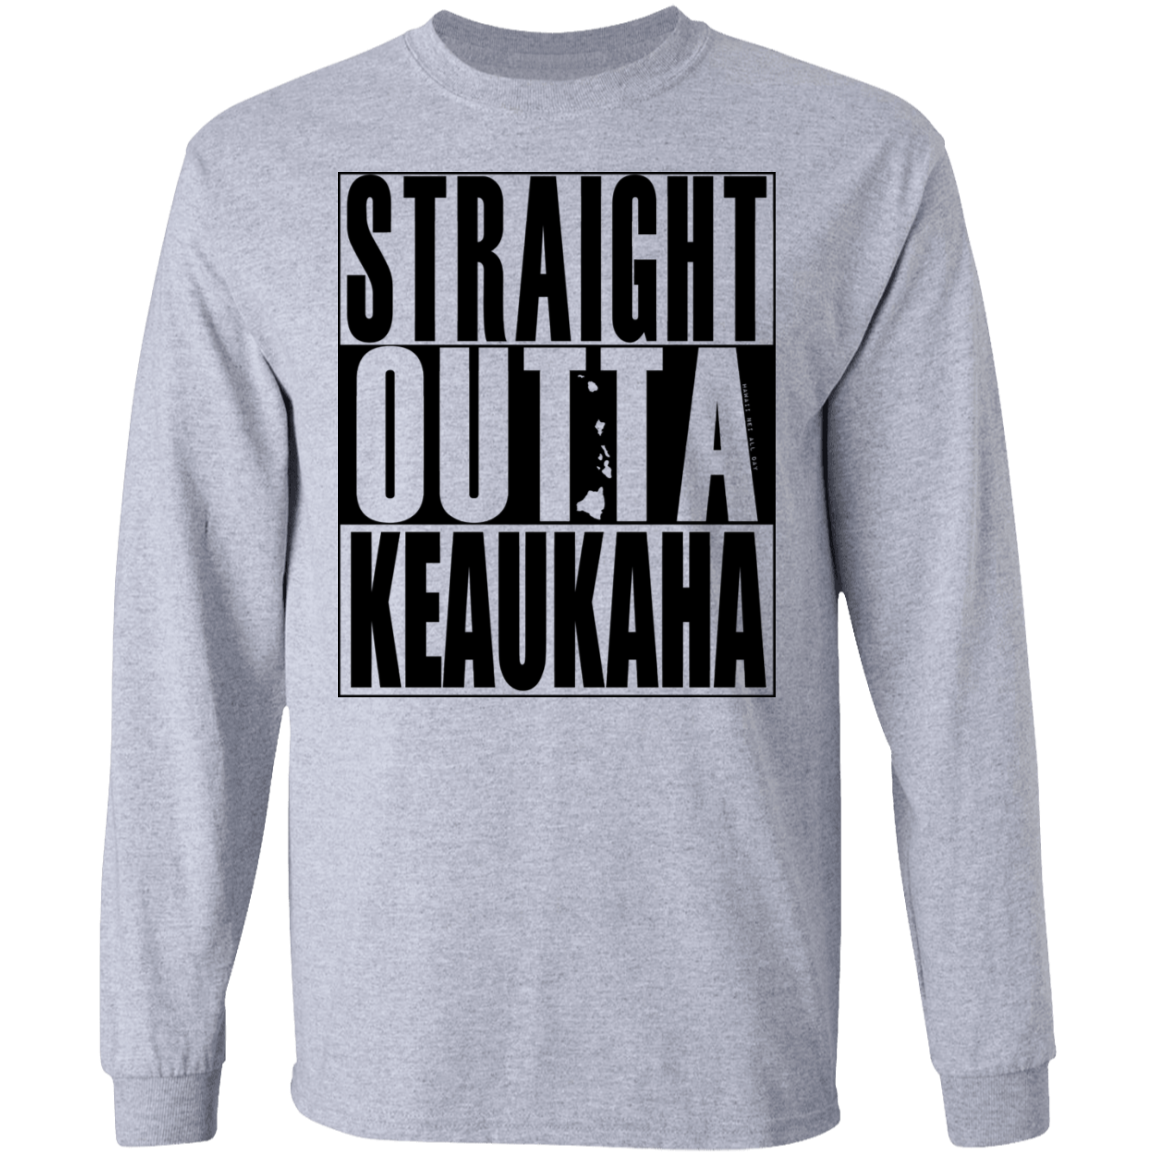 Straight Outta Keaukaha(black ink) LS T-Shirt